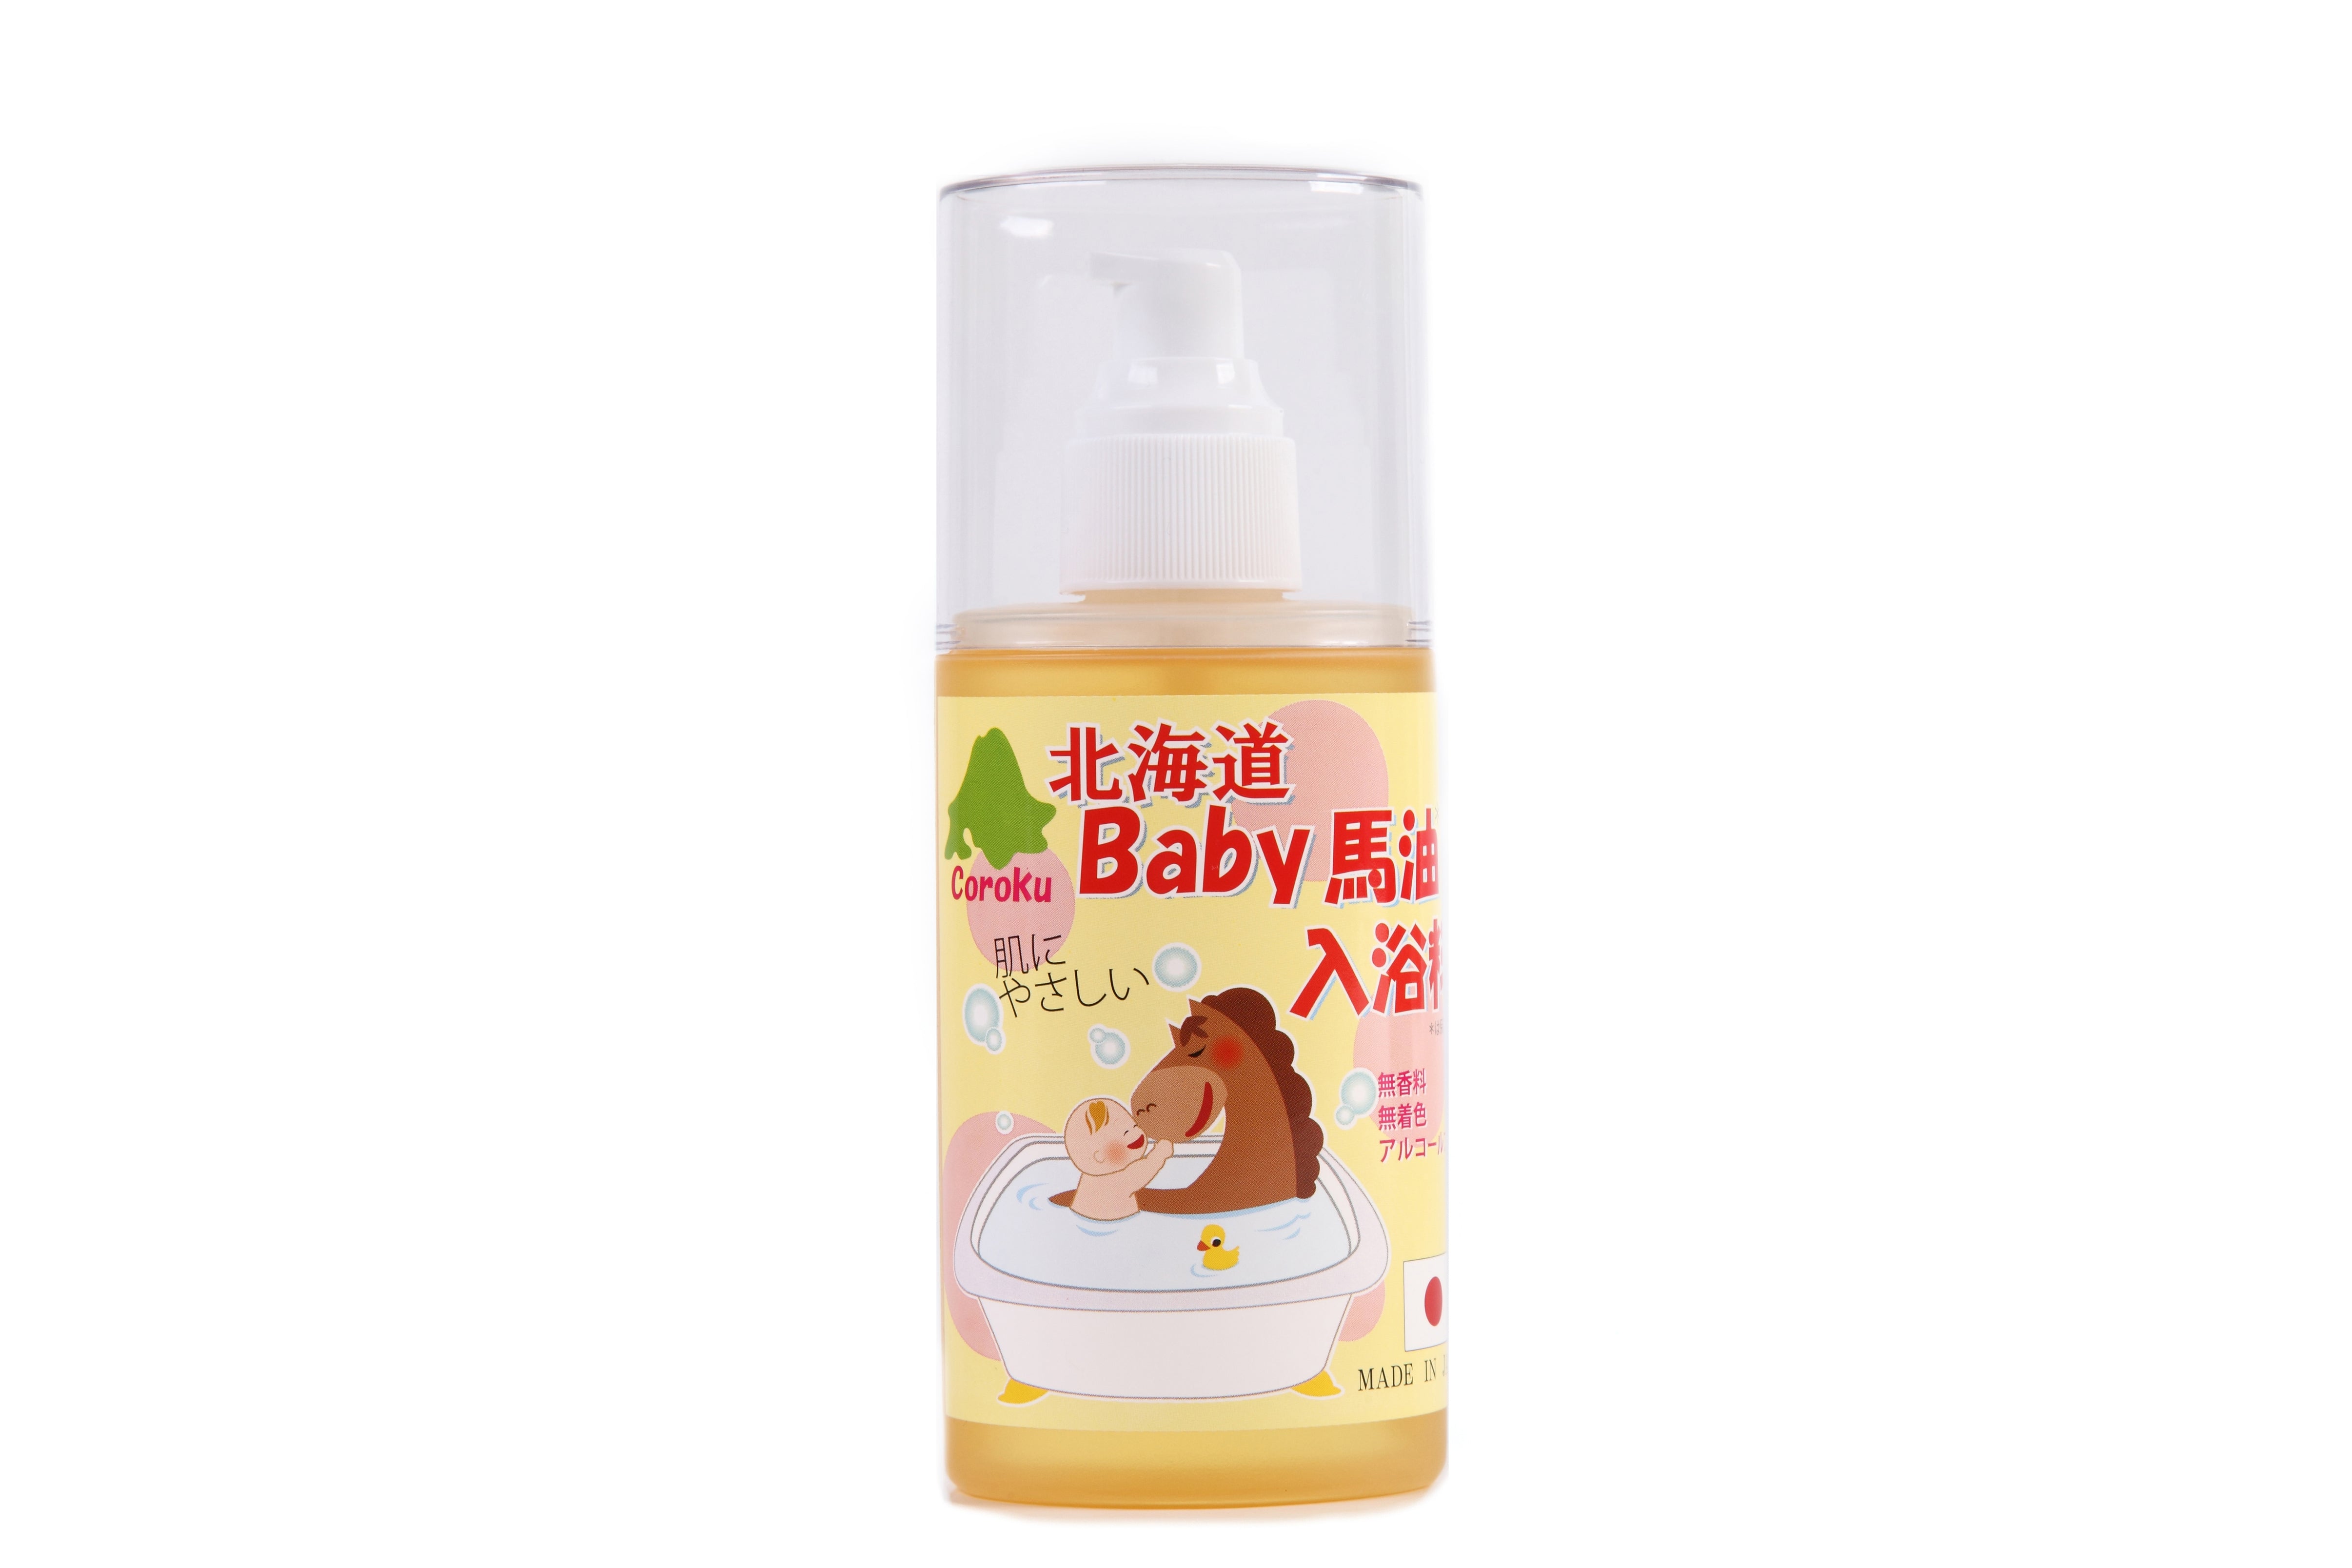 Hokkaido Baby Horse Oil Bath Additive